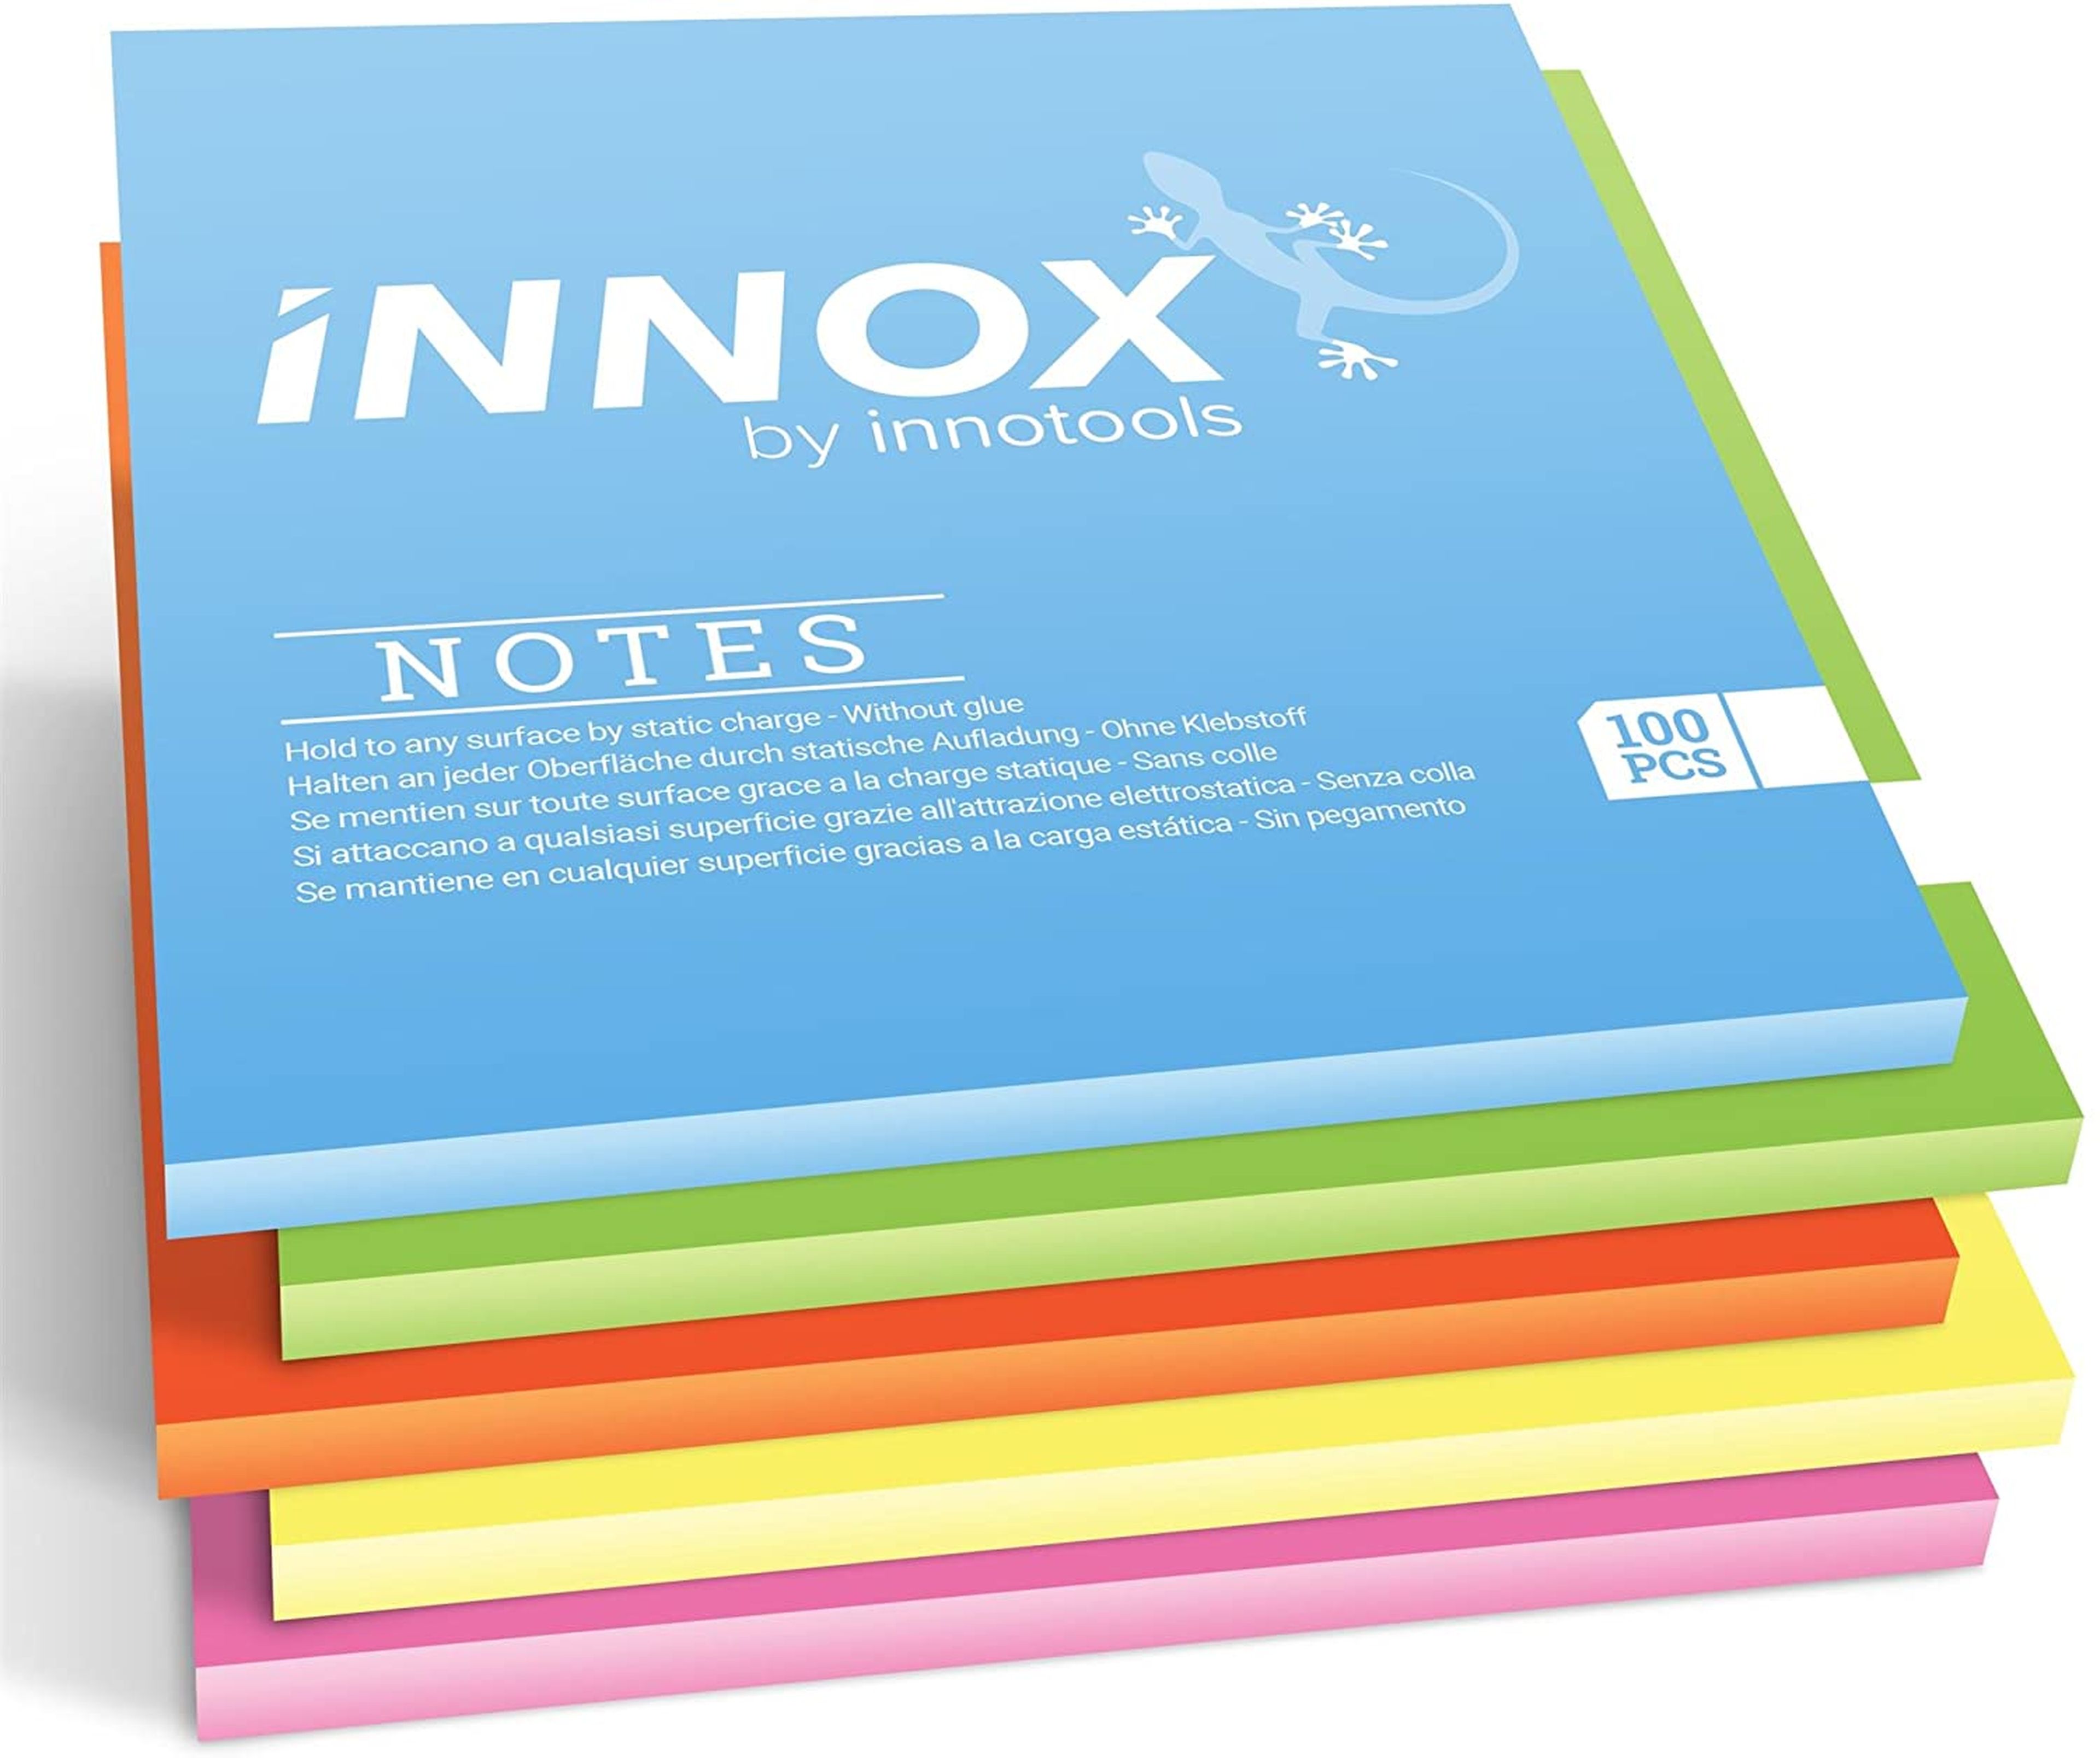 INNOX by innotols